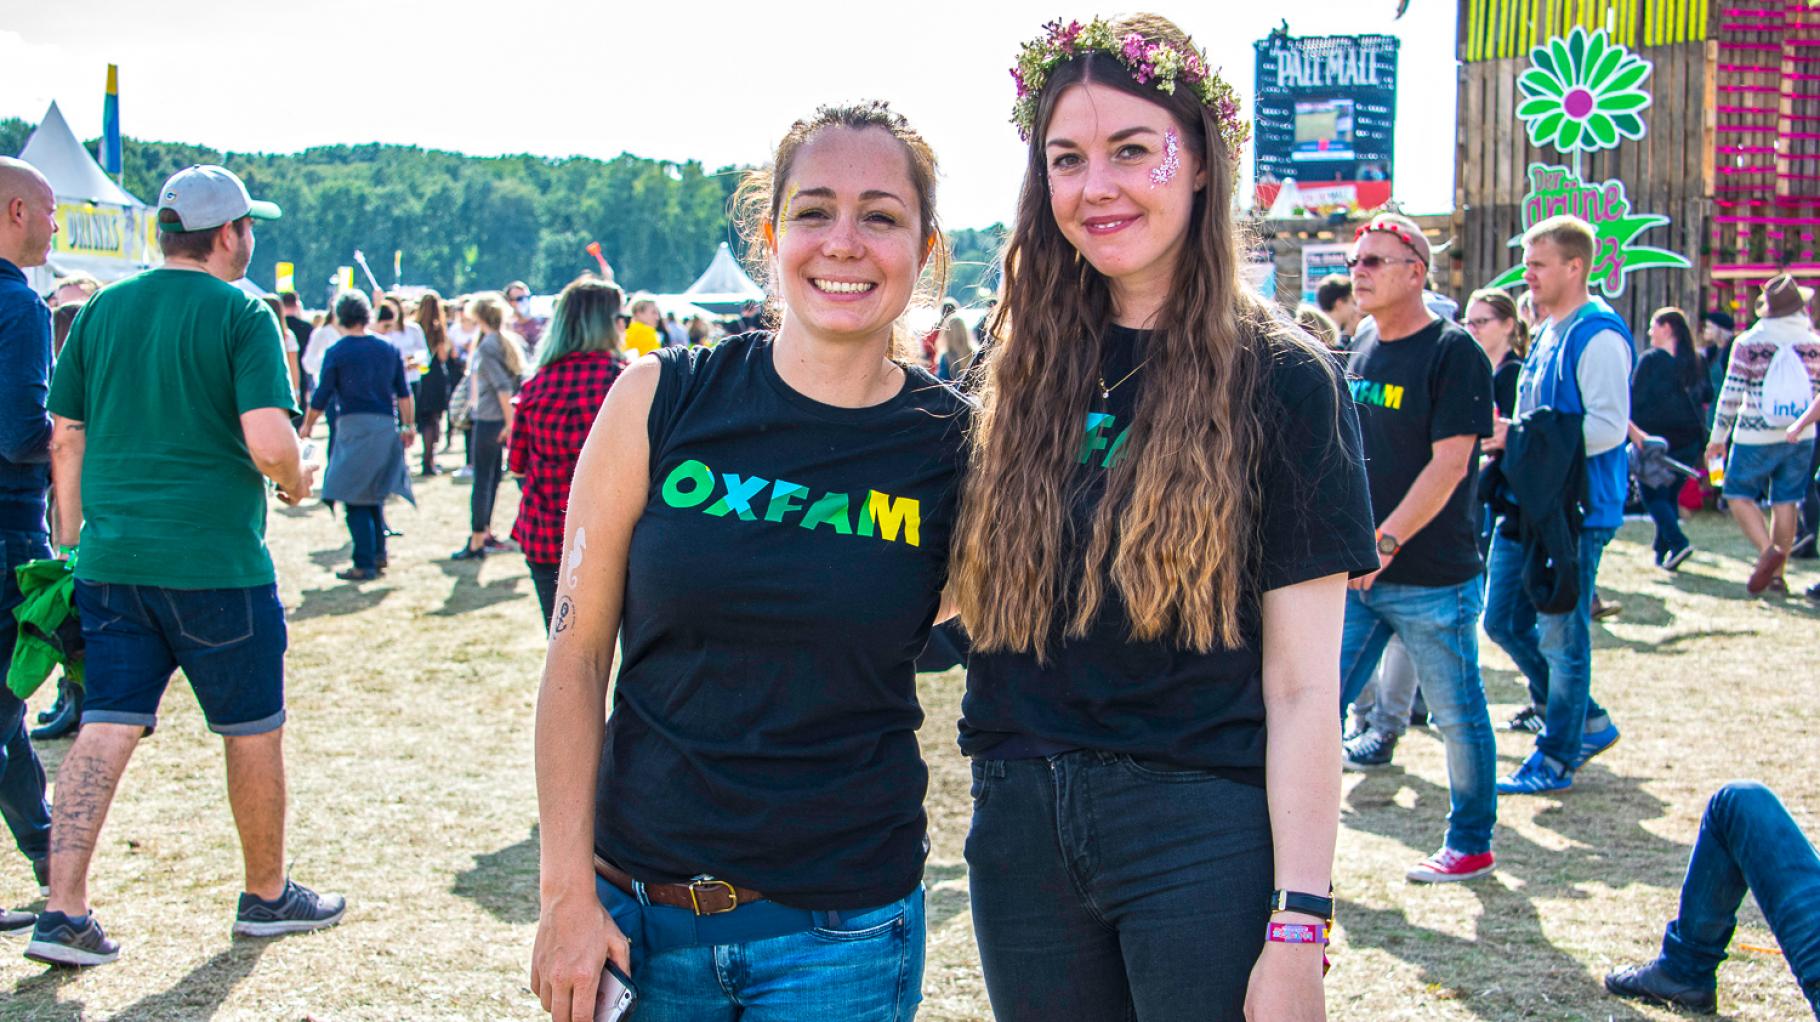 Das Oxfam on tour-Team Caro und Franziska beim Lollapalooza-Festival.